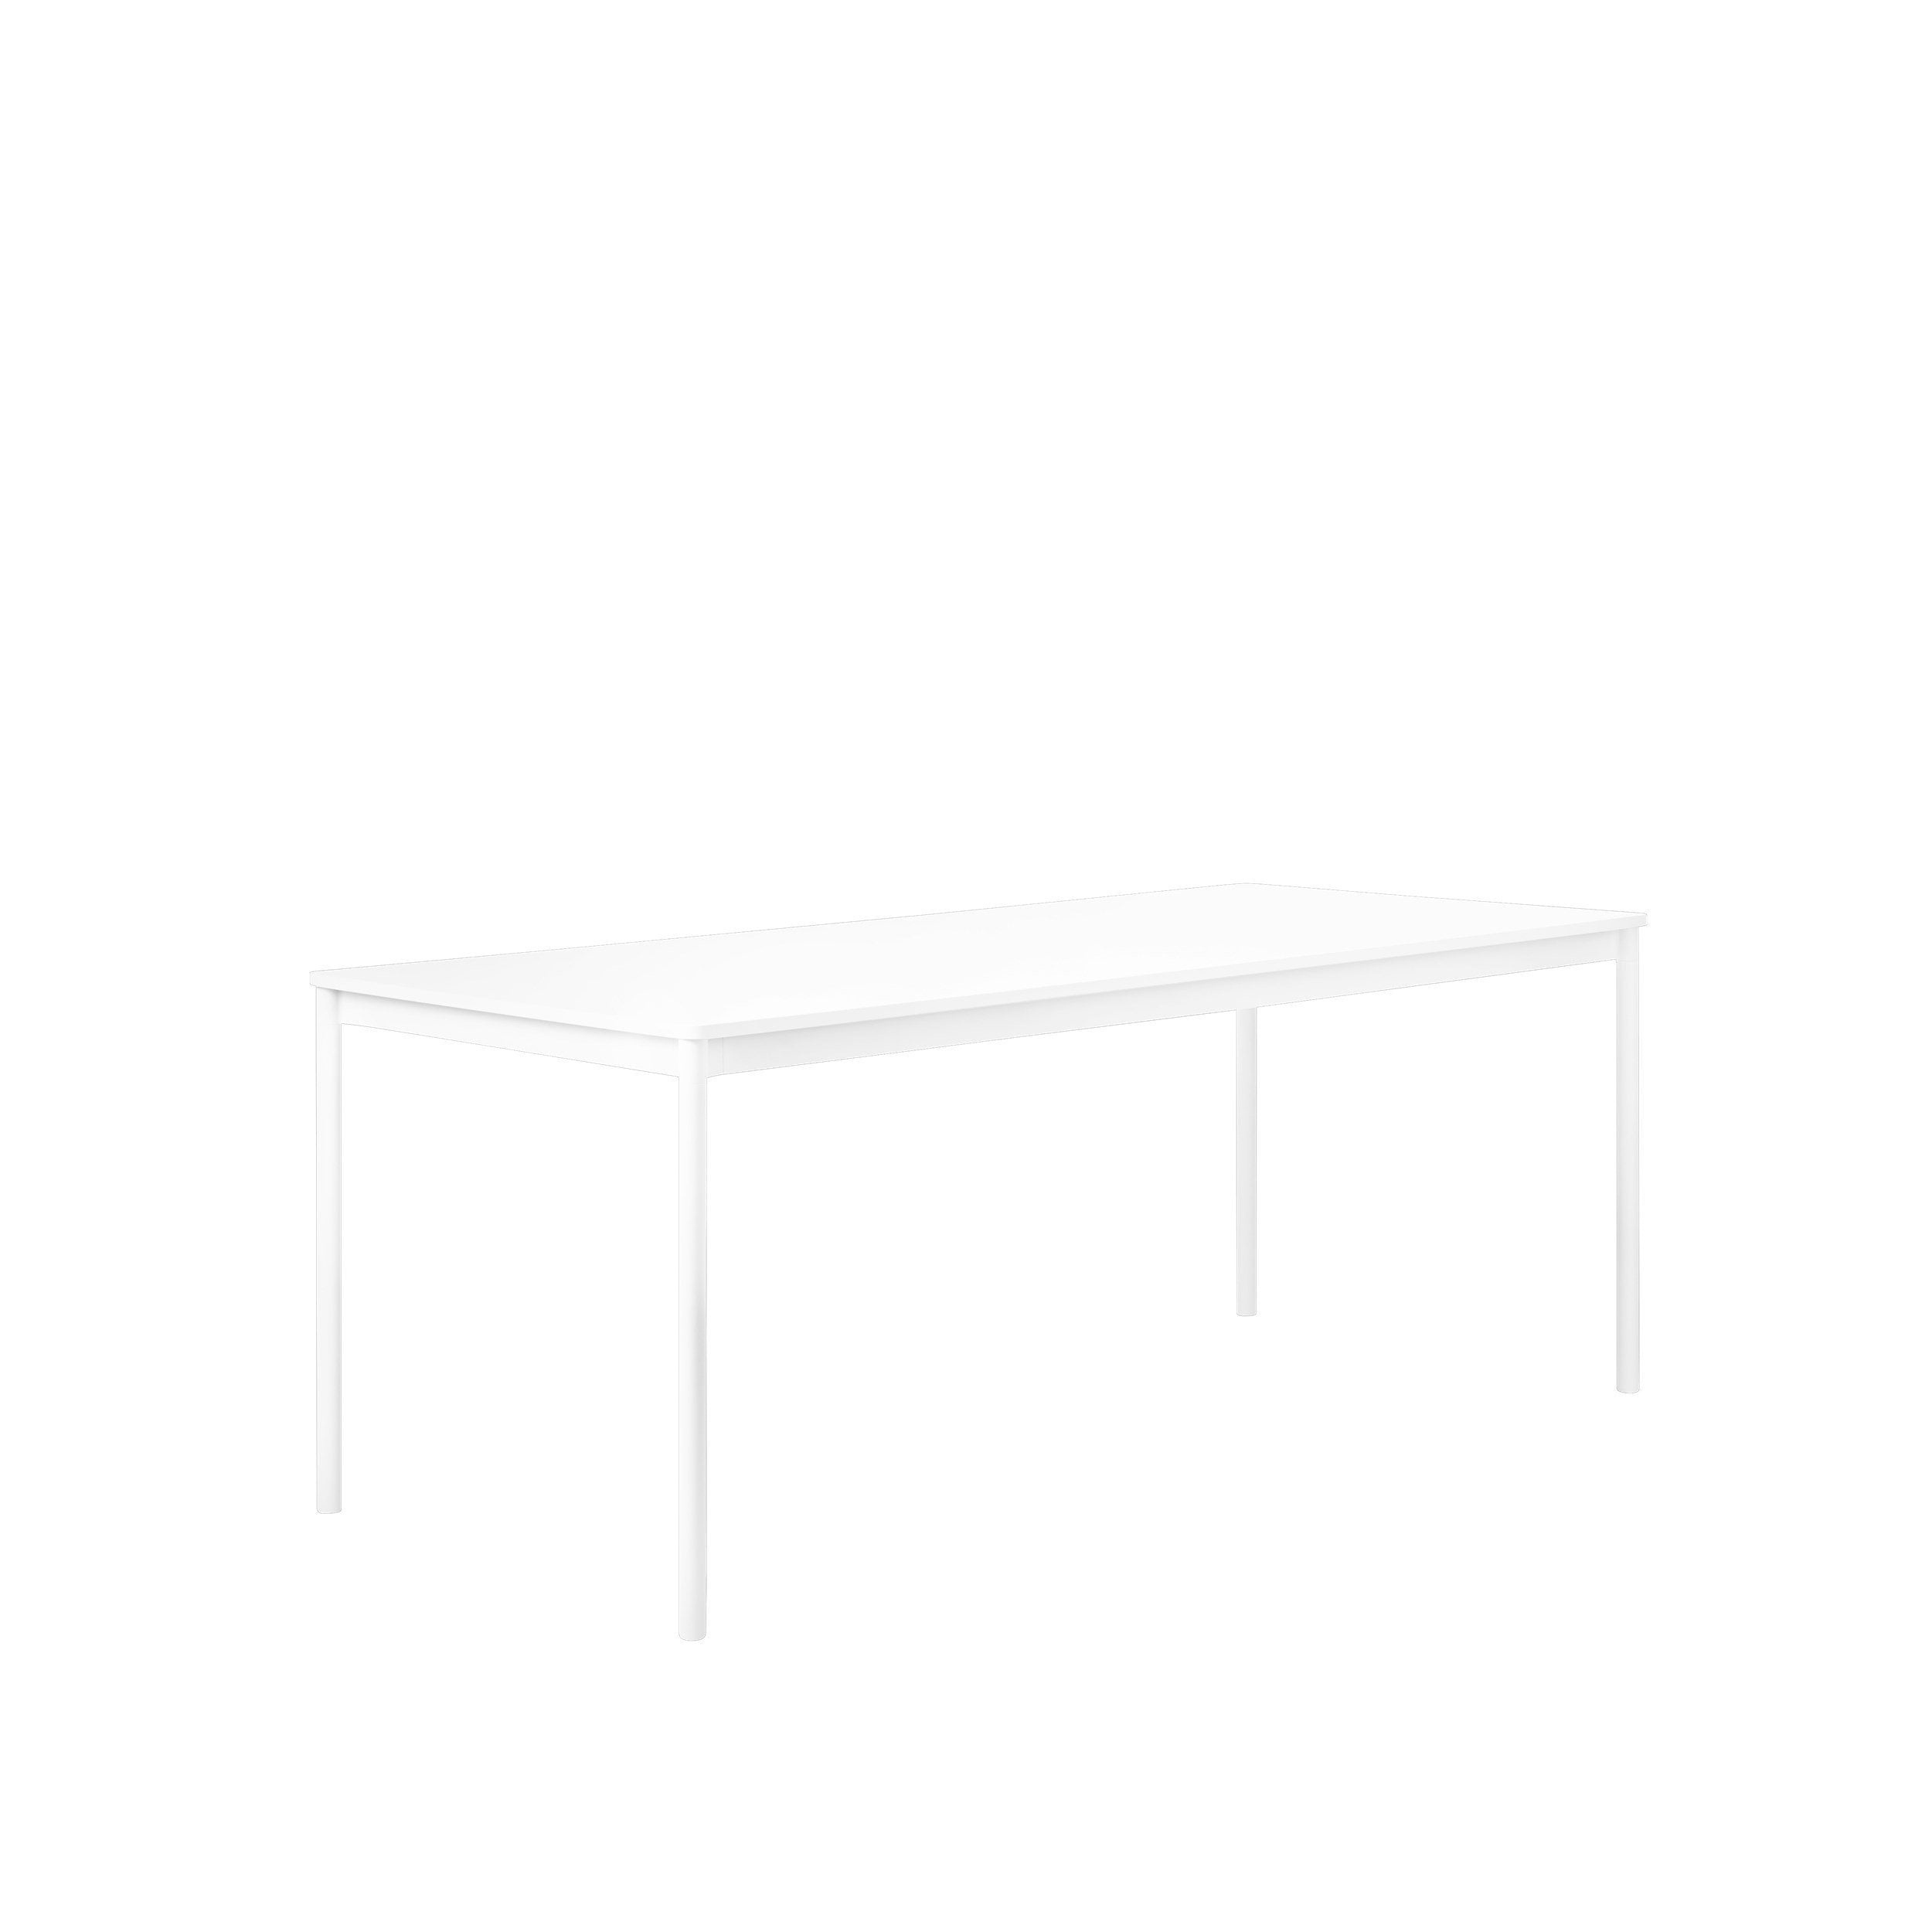 Základní tabulka MUUTO 250 x90 cm, bílá